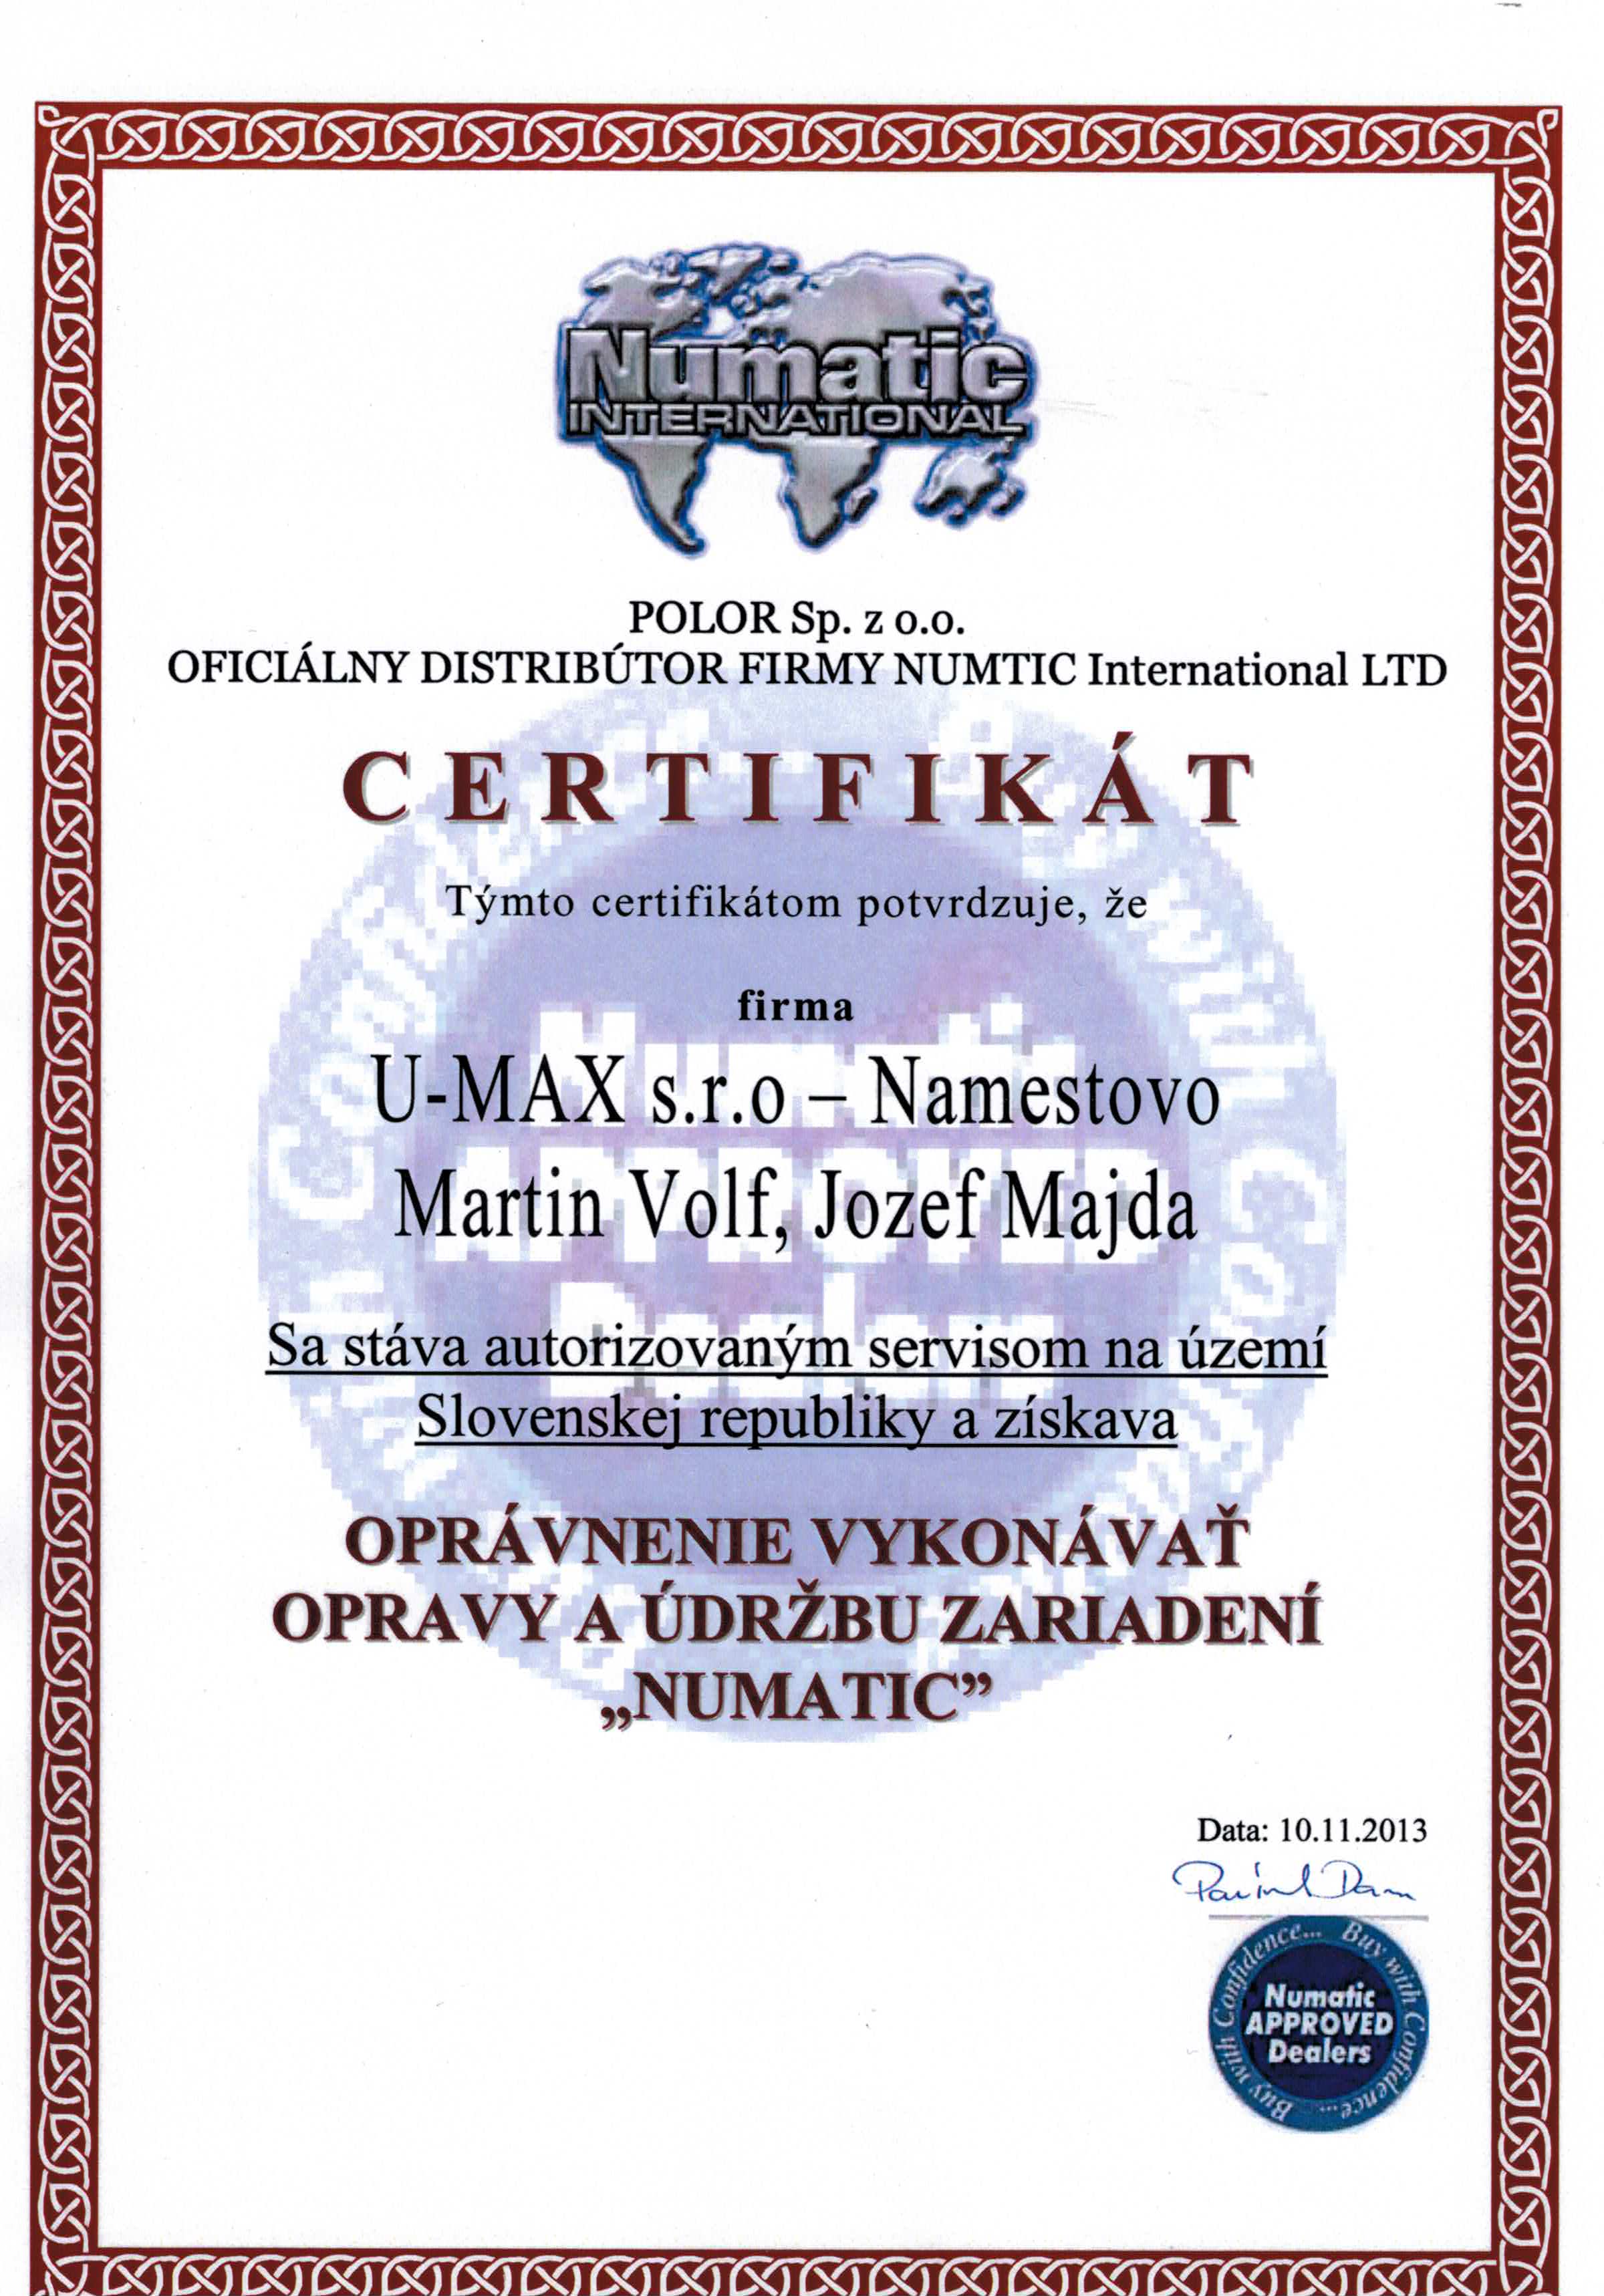 certifikat numatic u-max